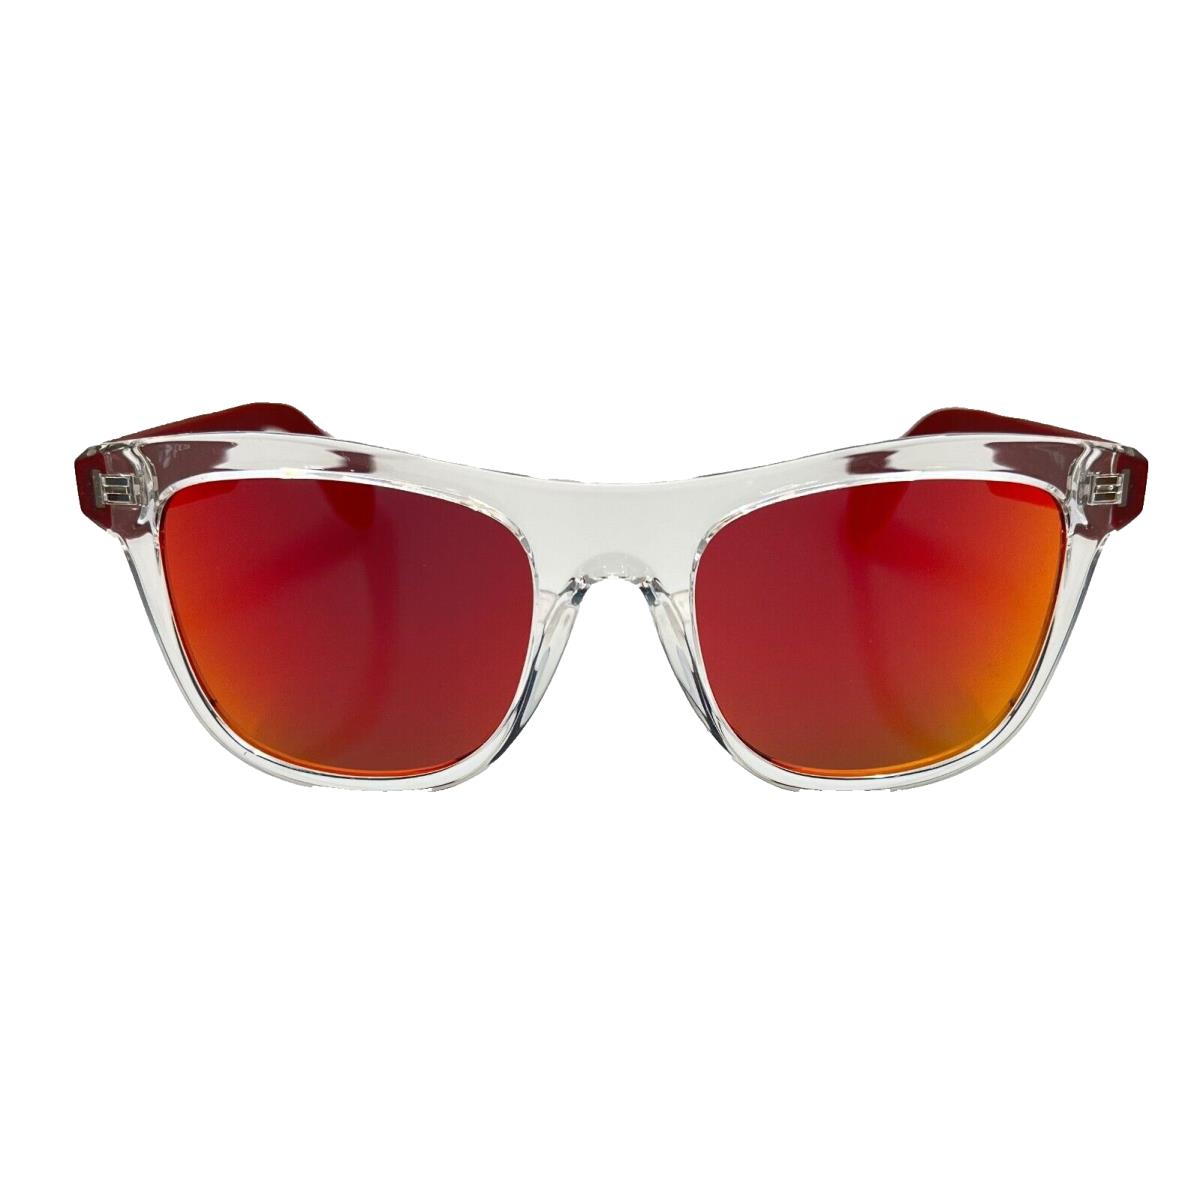 Adidas Originals - OR0057 26U 53/20/145 Crystal Sunglasses Case - Frame: Clear, Lens: Red